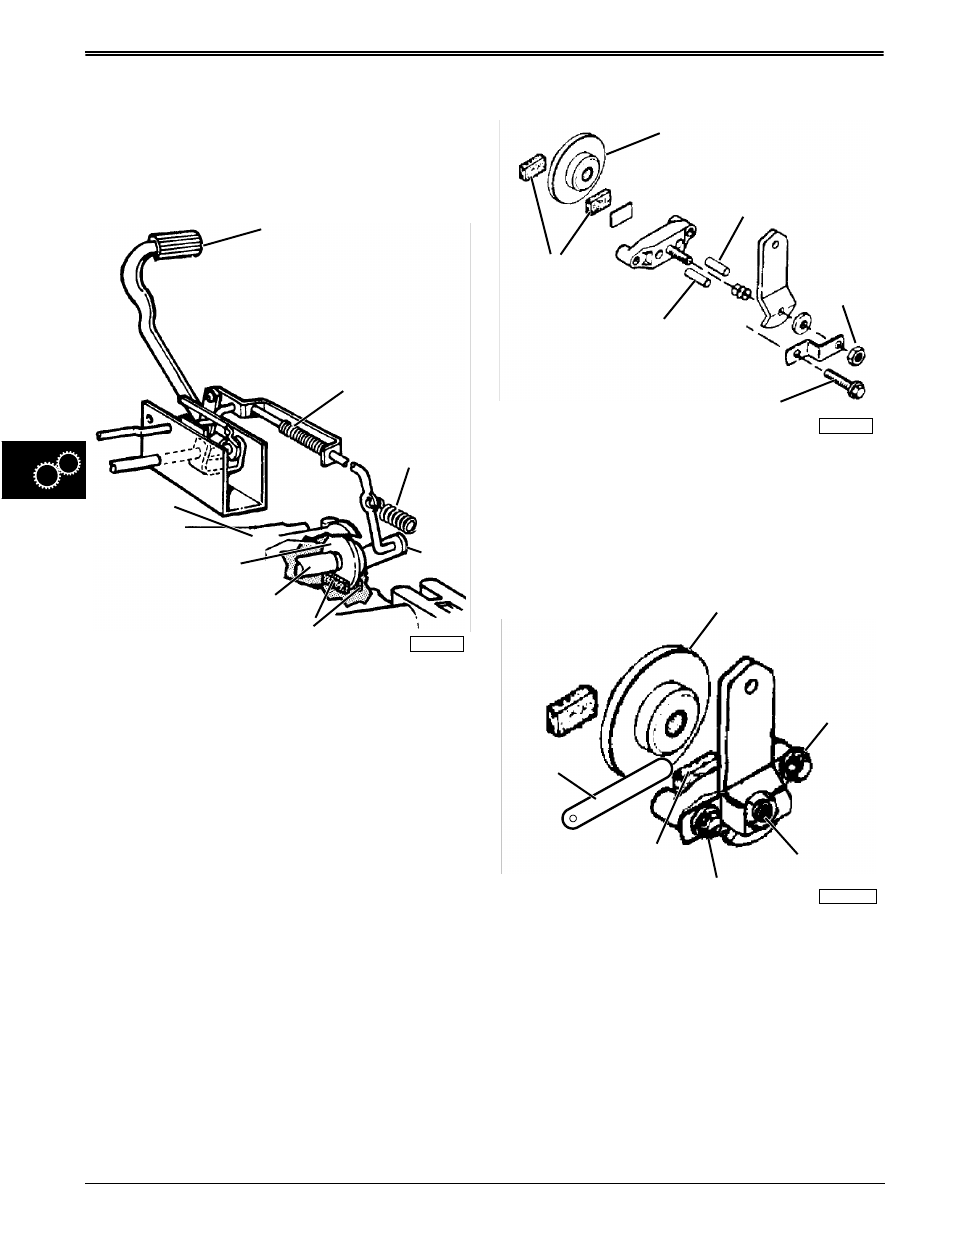 Repair | John Deere stx38 User Manual | Page 202 / 314 hyster 50 wiring diagram 